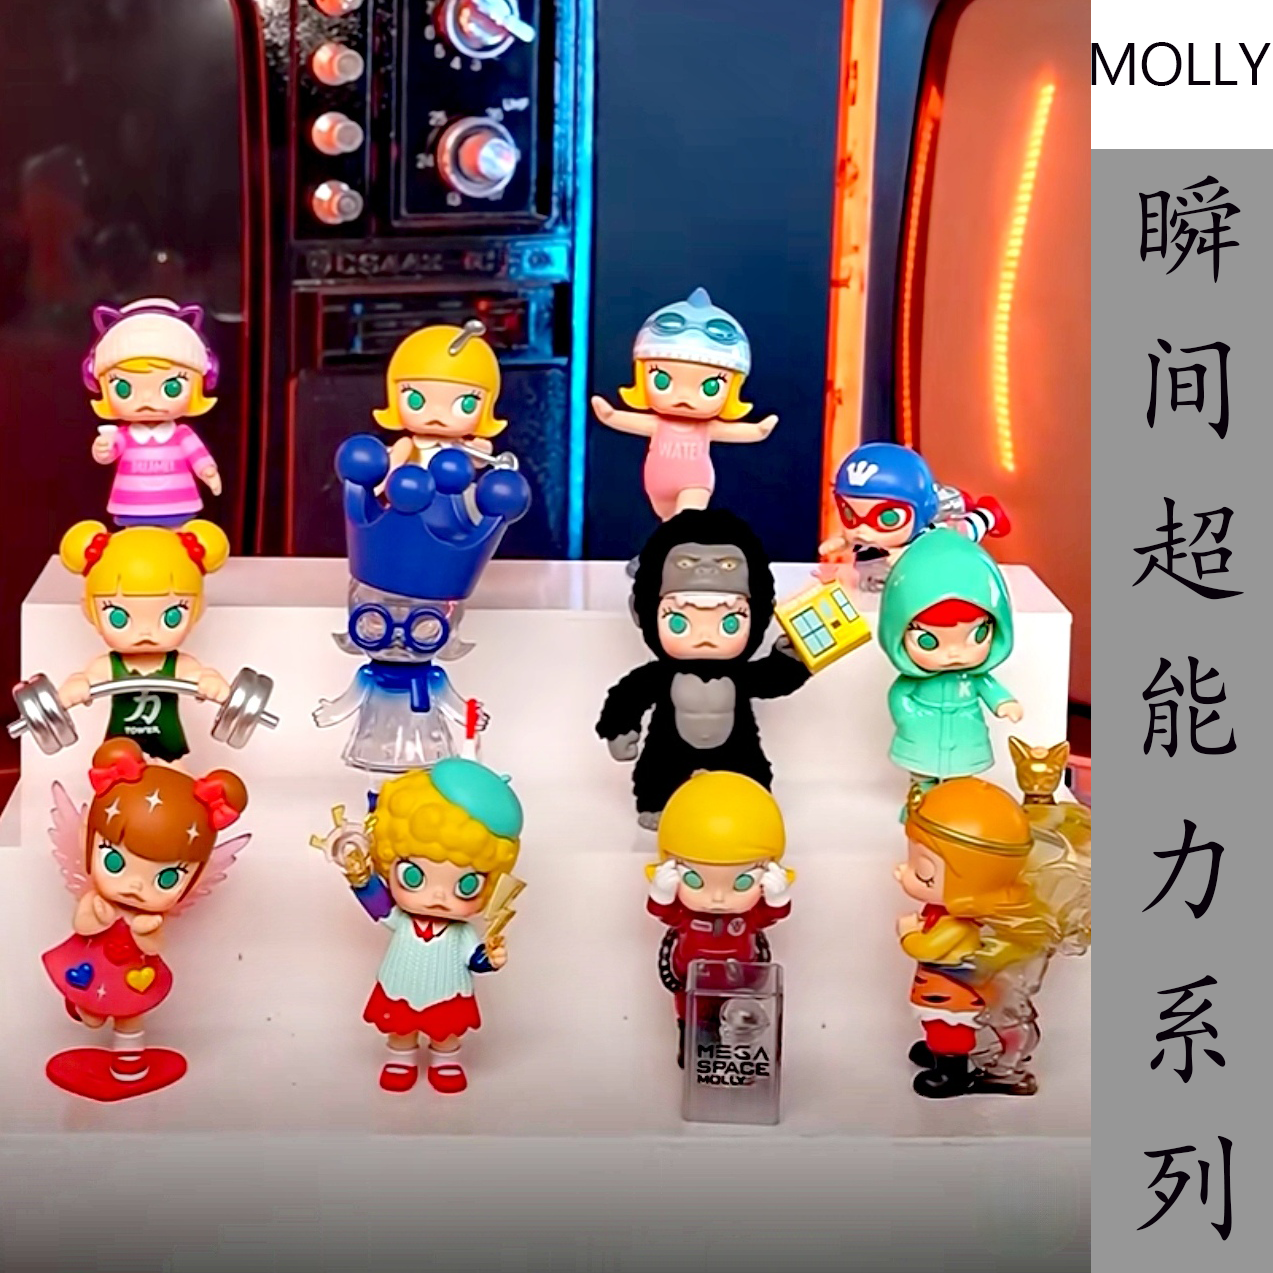 POPMART泡泡玛特 MOLLY瞬间超能力系列手办茉莉盲盒玩具礼物摆件